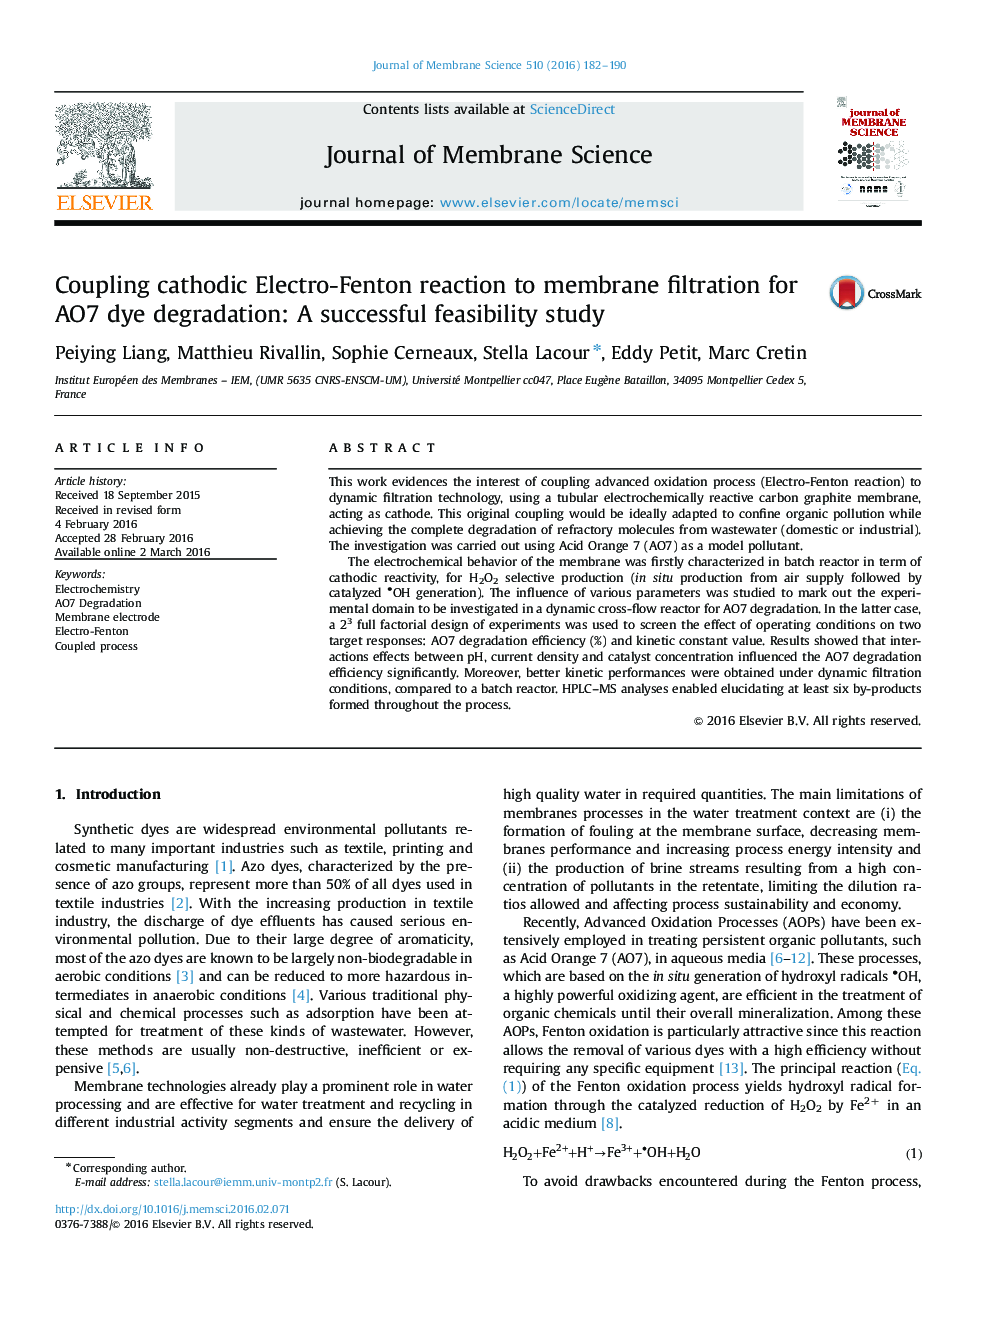 Coupling cathodic Electro-Fenton reaction to membrane filtration for AO7 dye degradation: A successful feasibility study